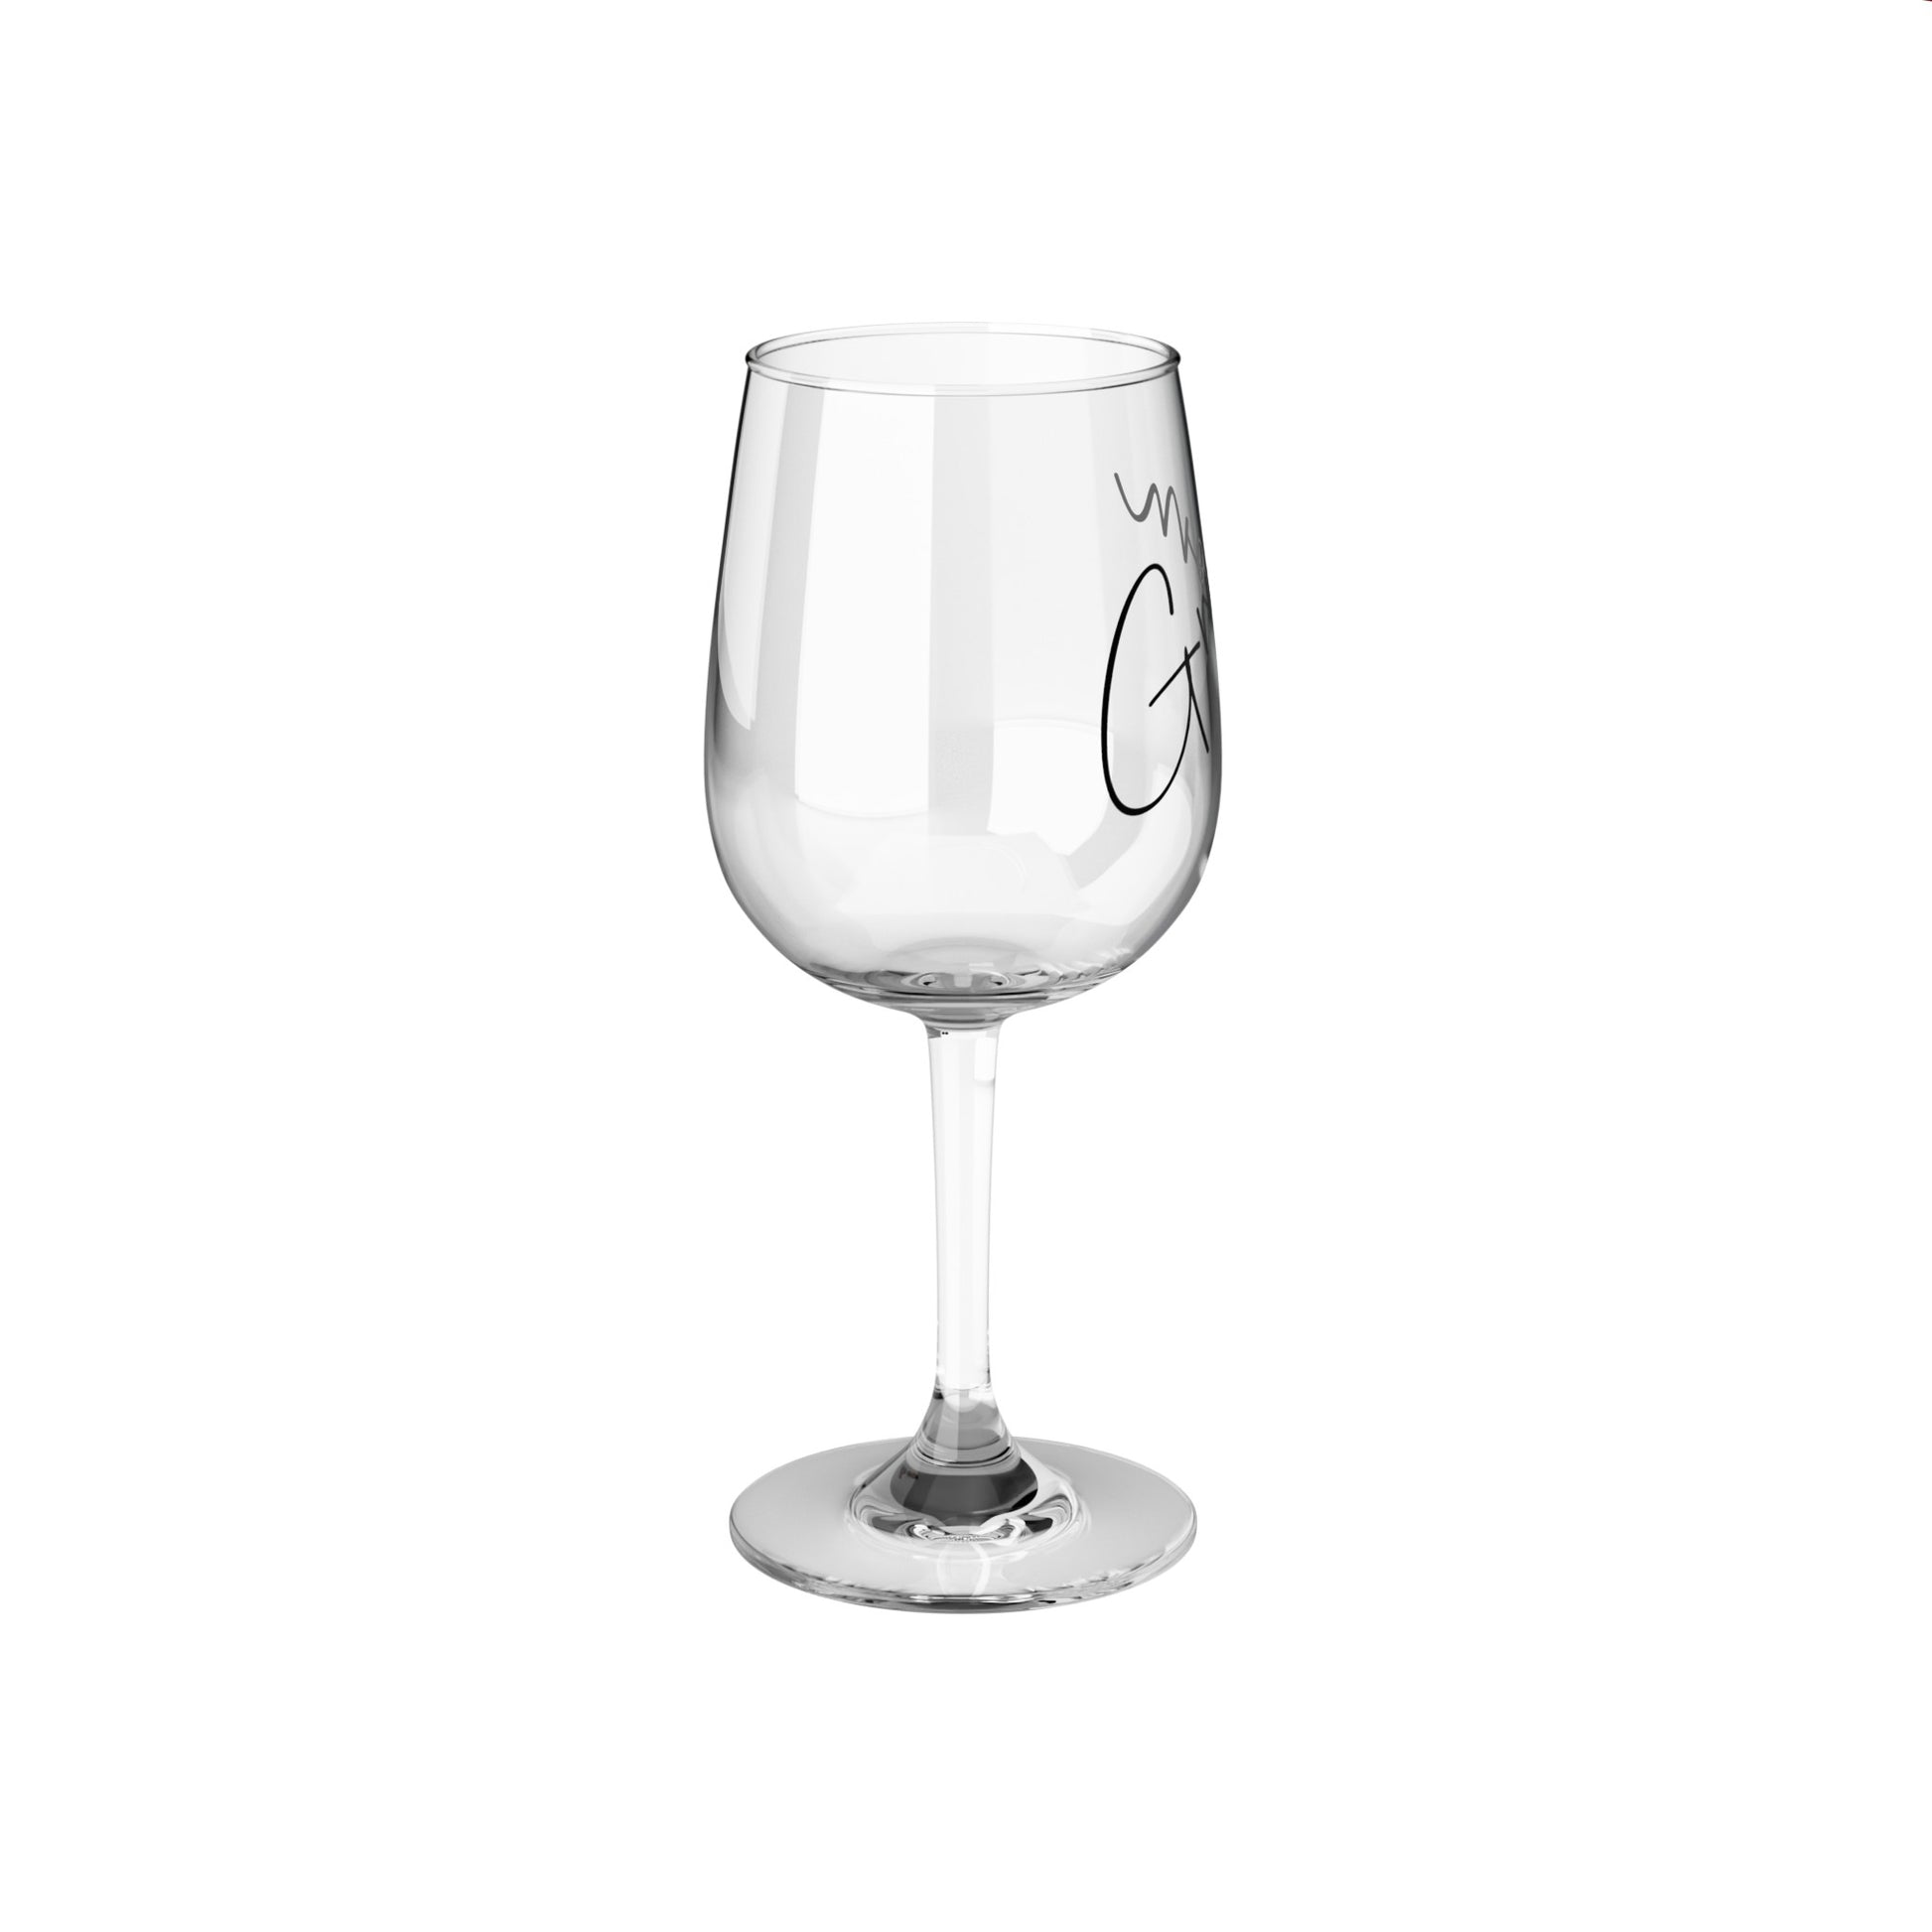 Wedding wine glass for groom, side view.